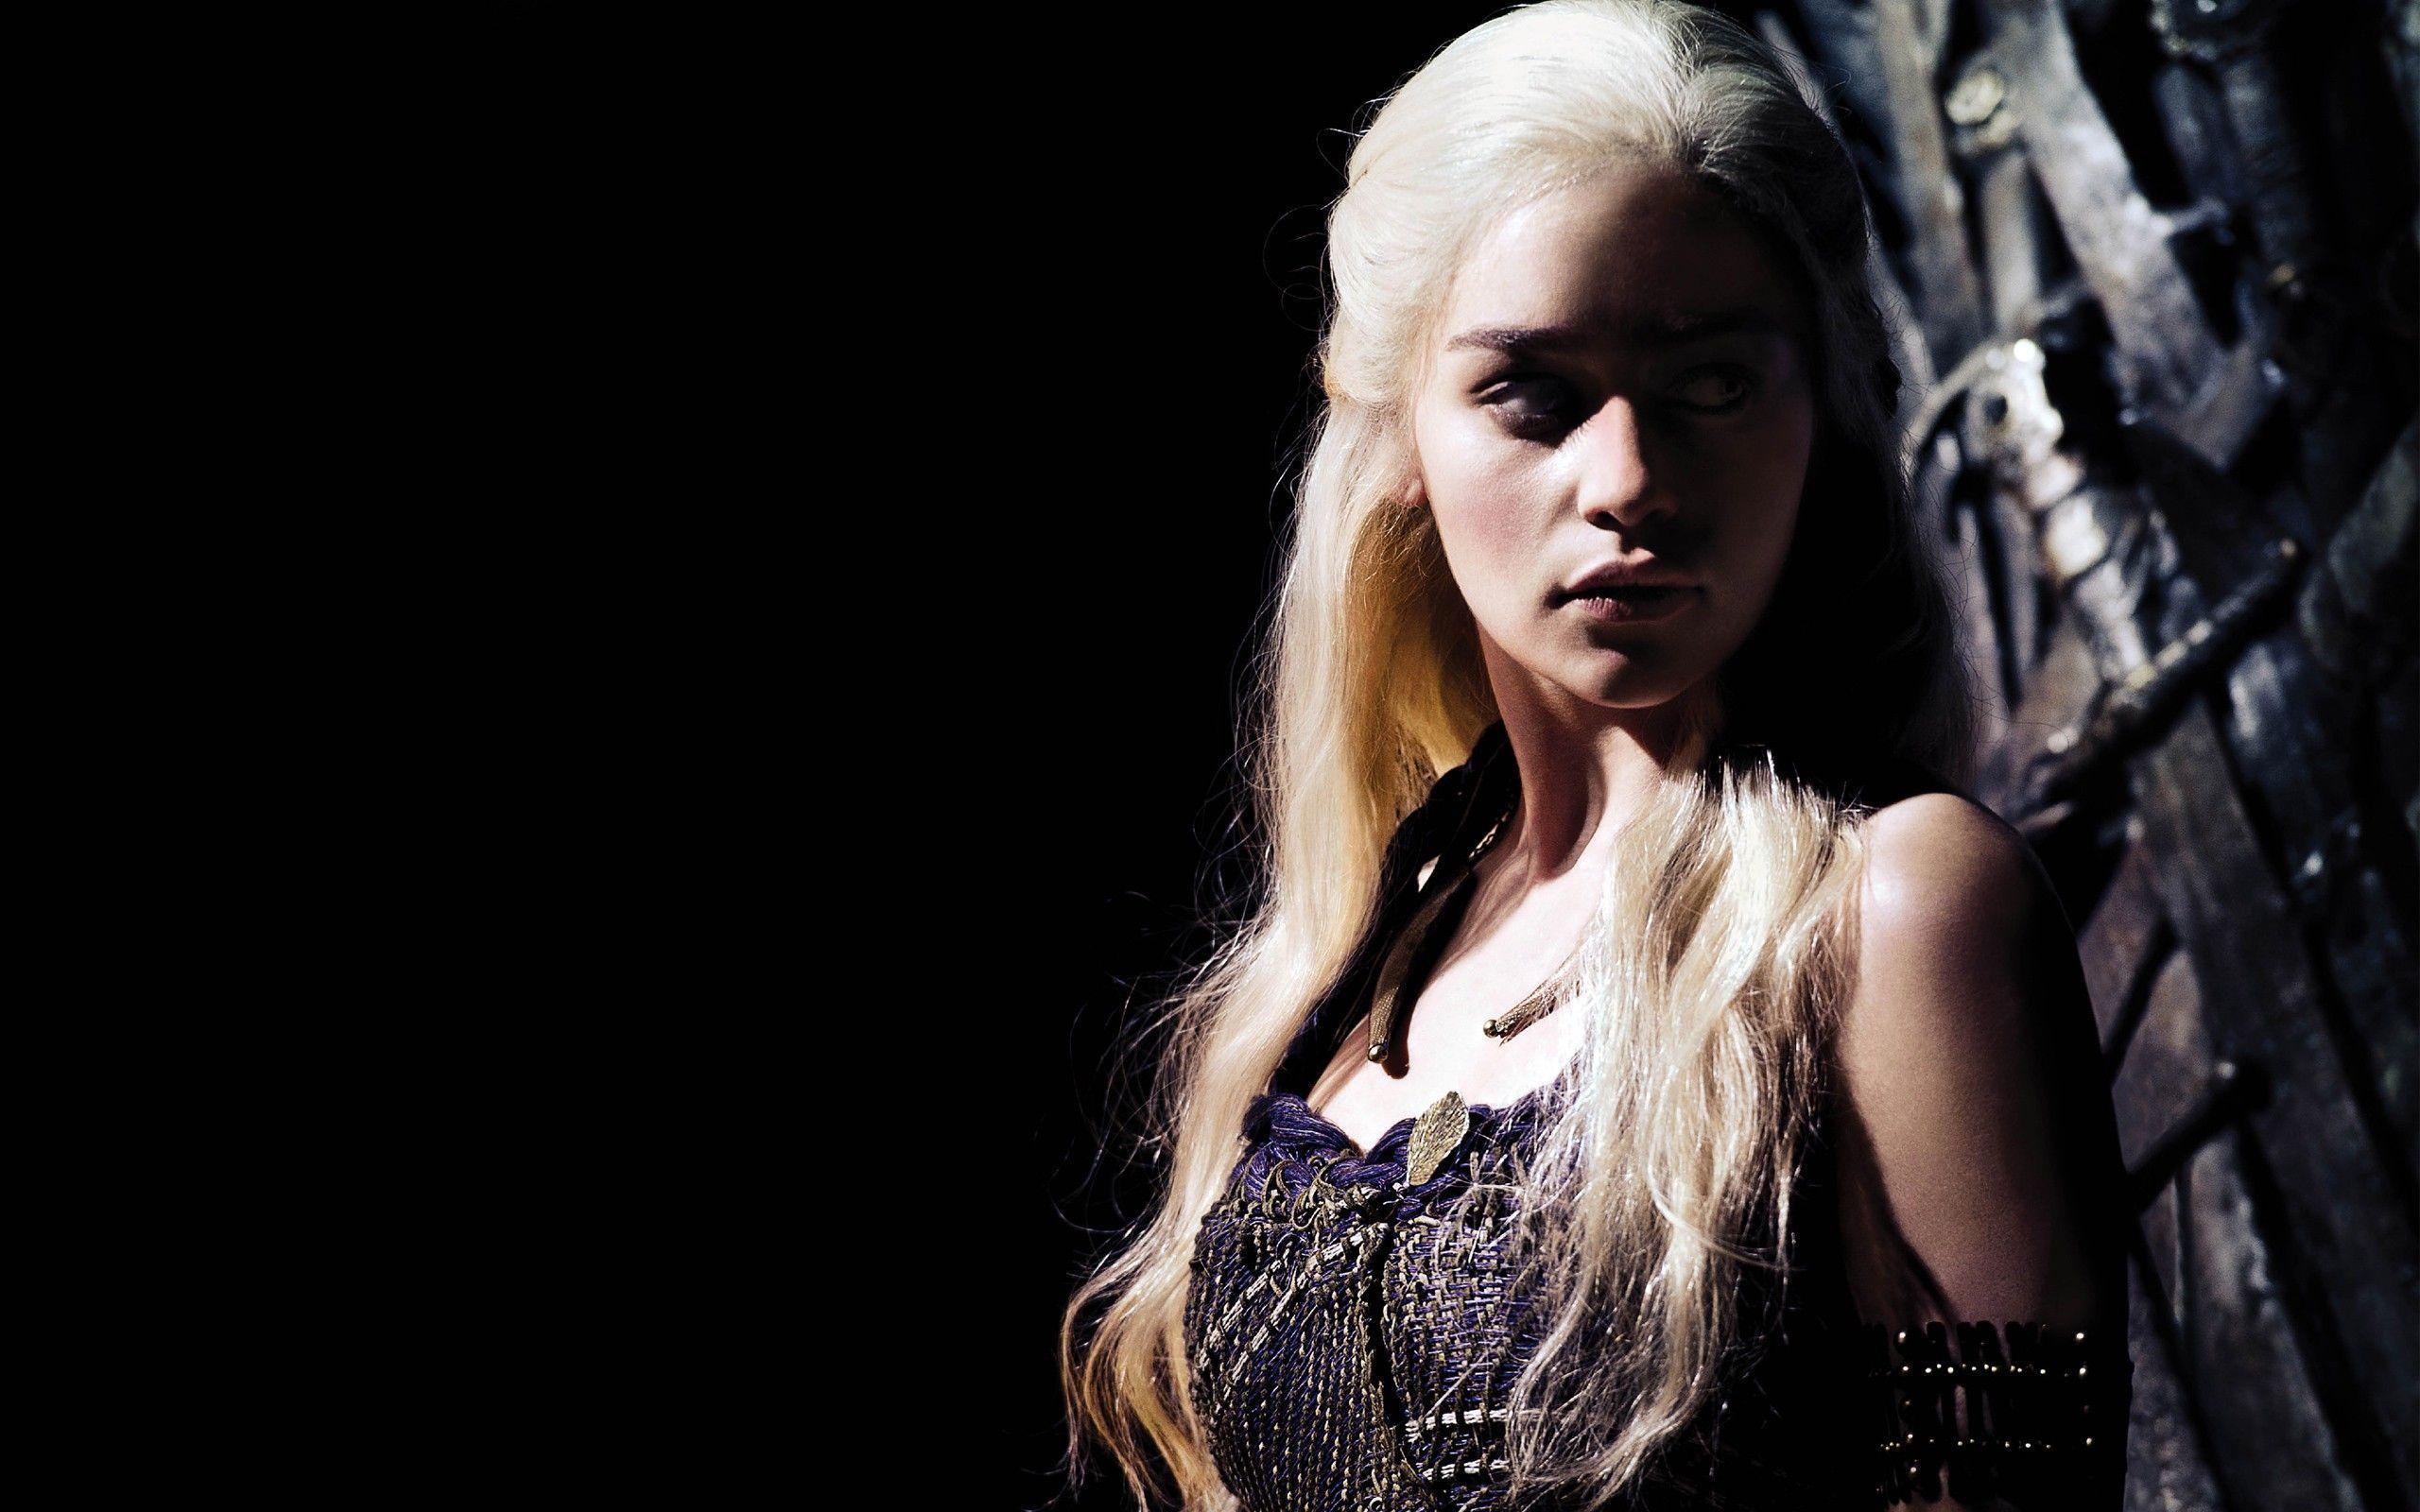 Daenerys Targaryen HD Wallpaper and Background Image